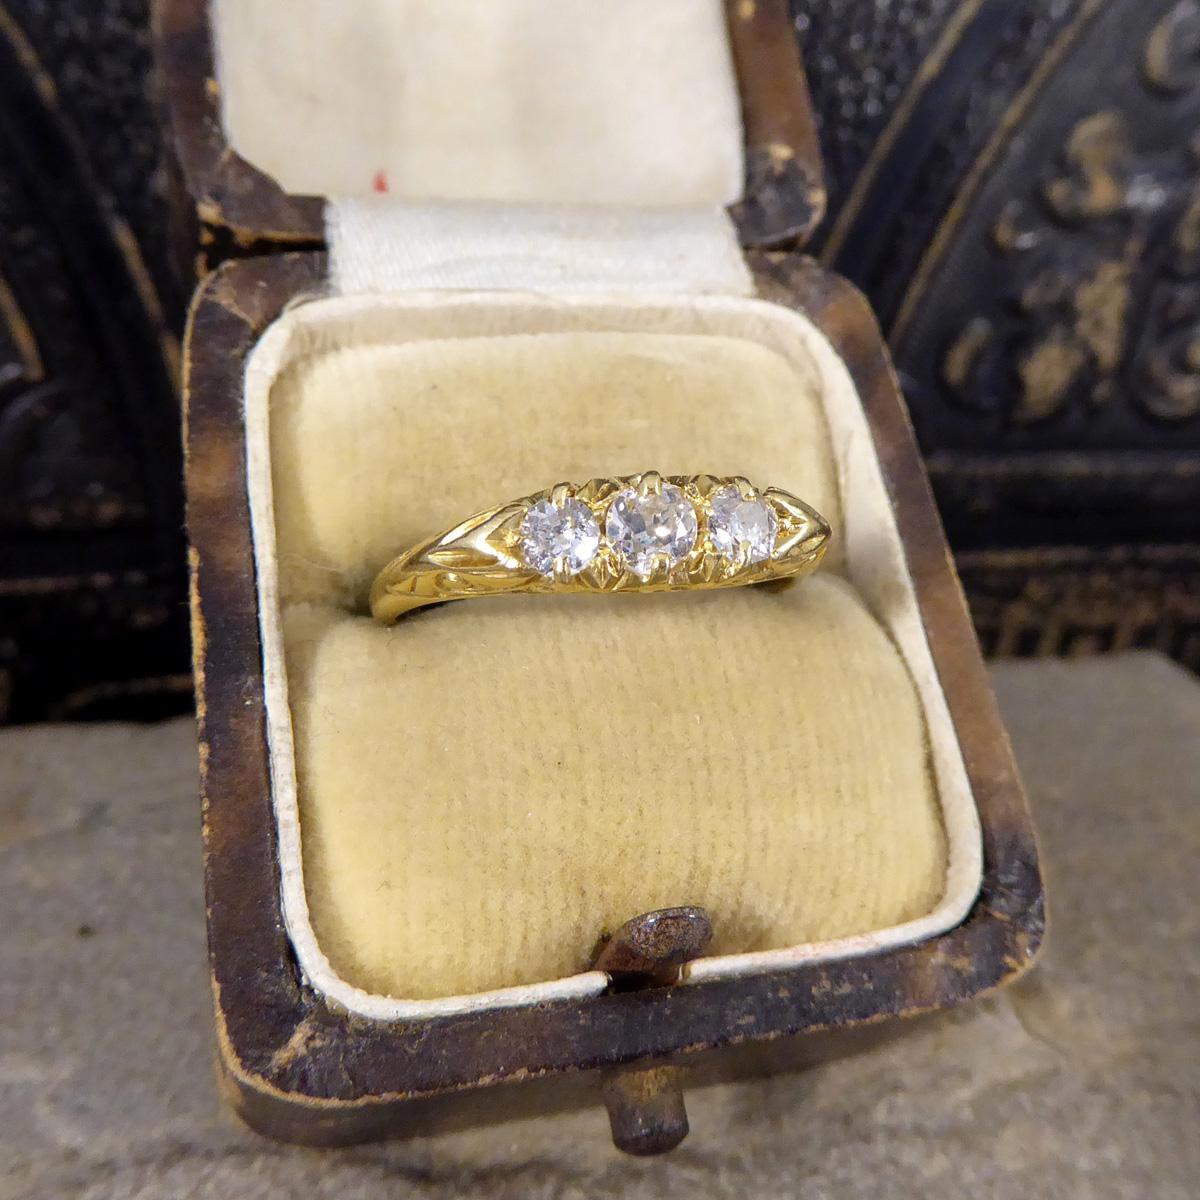 Edwardian Three Stone Diamond Ring with Swirl Gallery in 18 Carat Yellow Gold 5